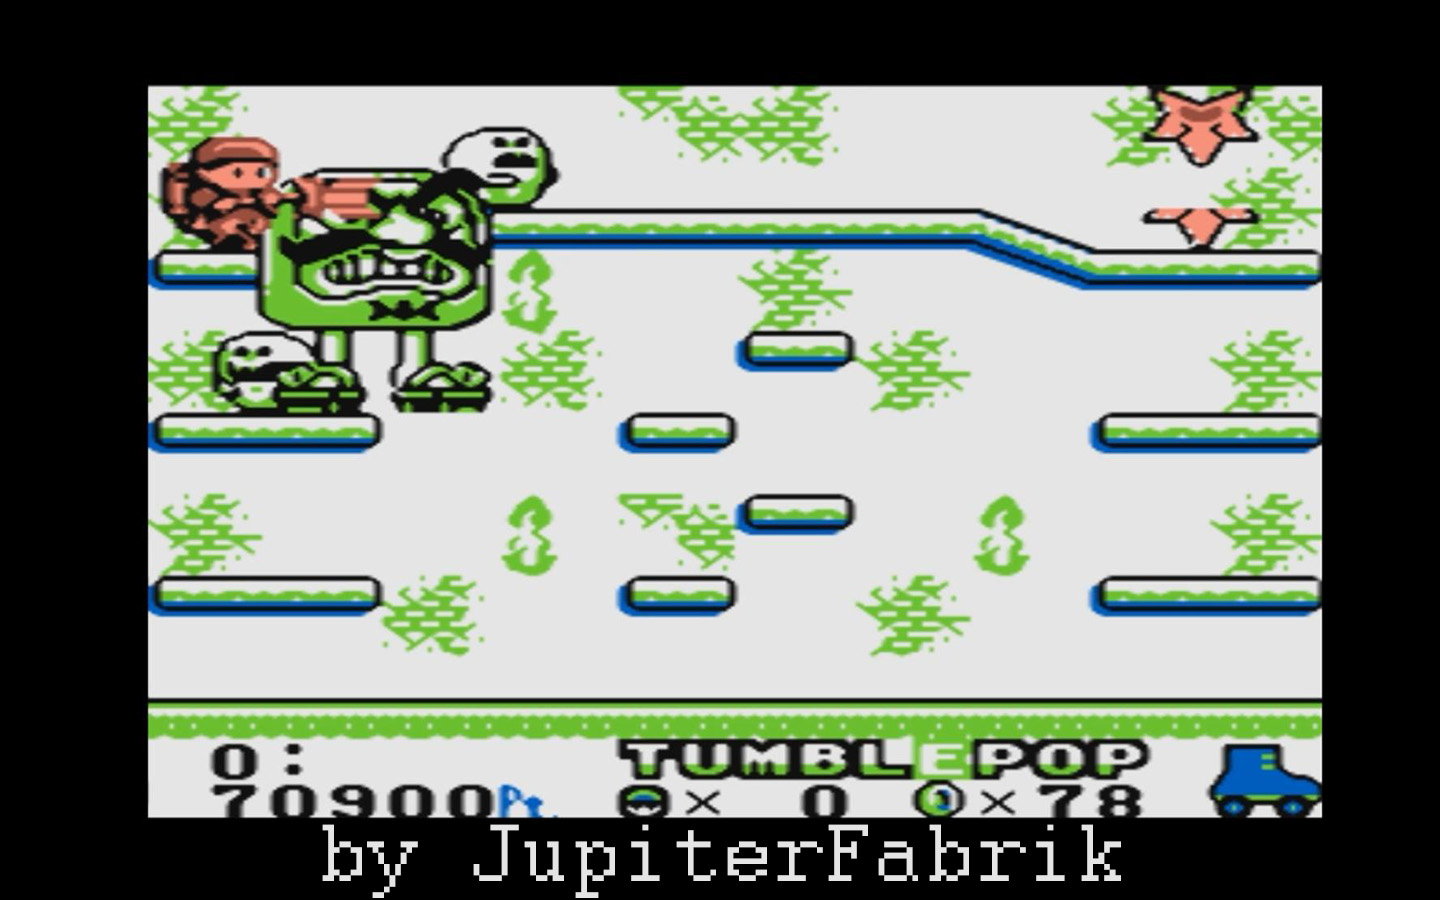 JupiterFabrik: Tumble Pop (Game Boy Emulated) 70,900 points on 2021-05-07 14:39:20